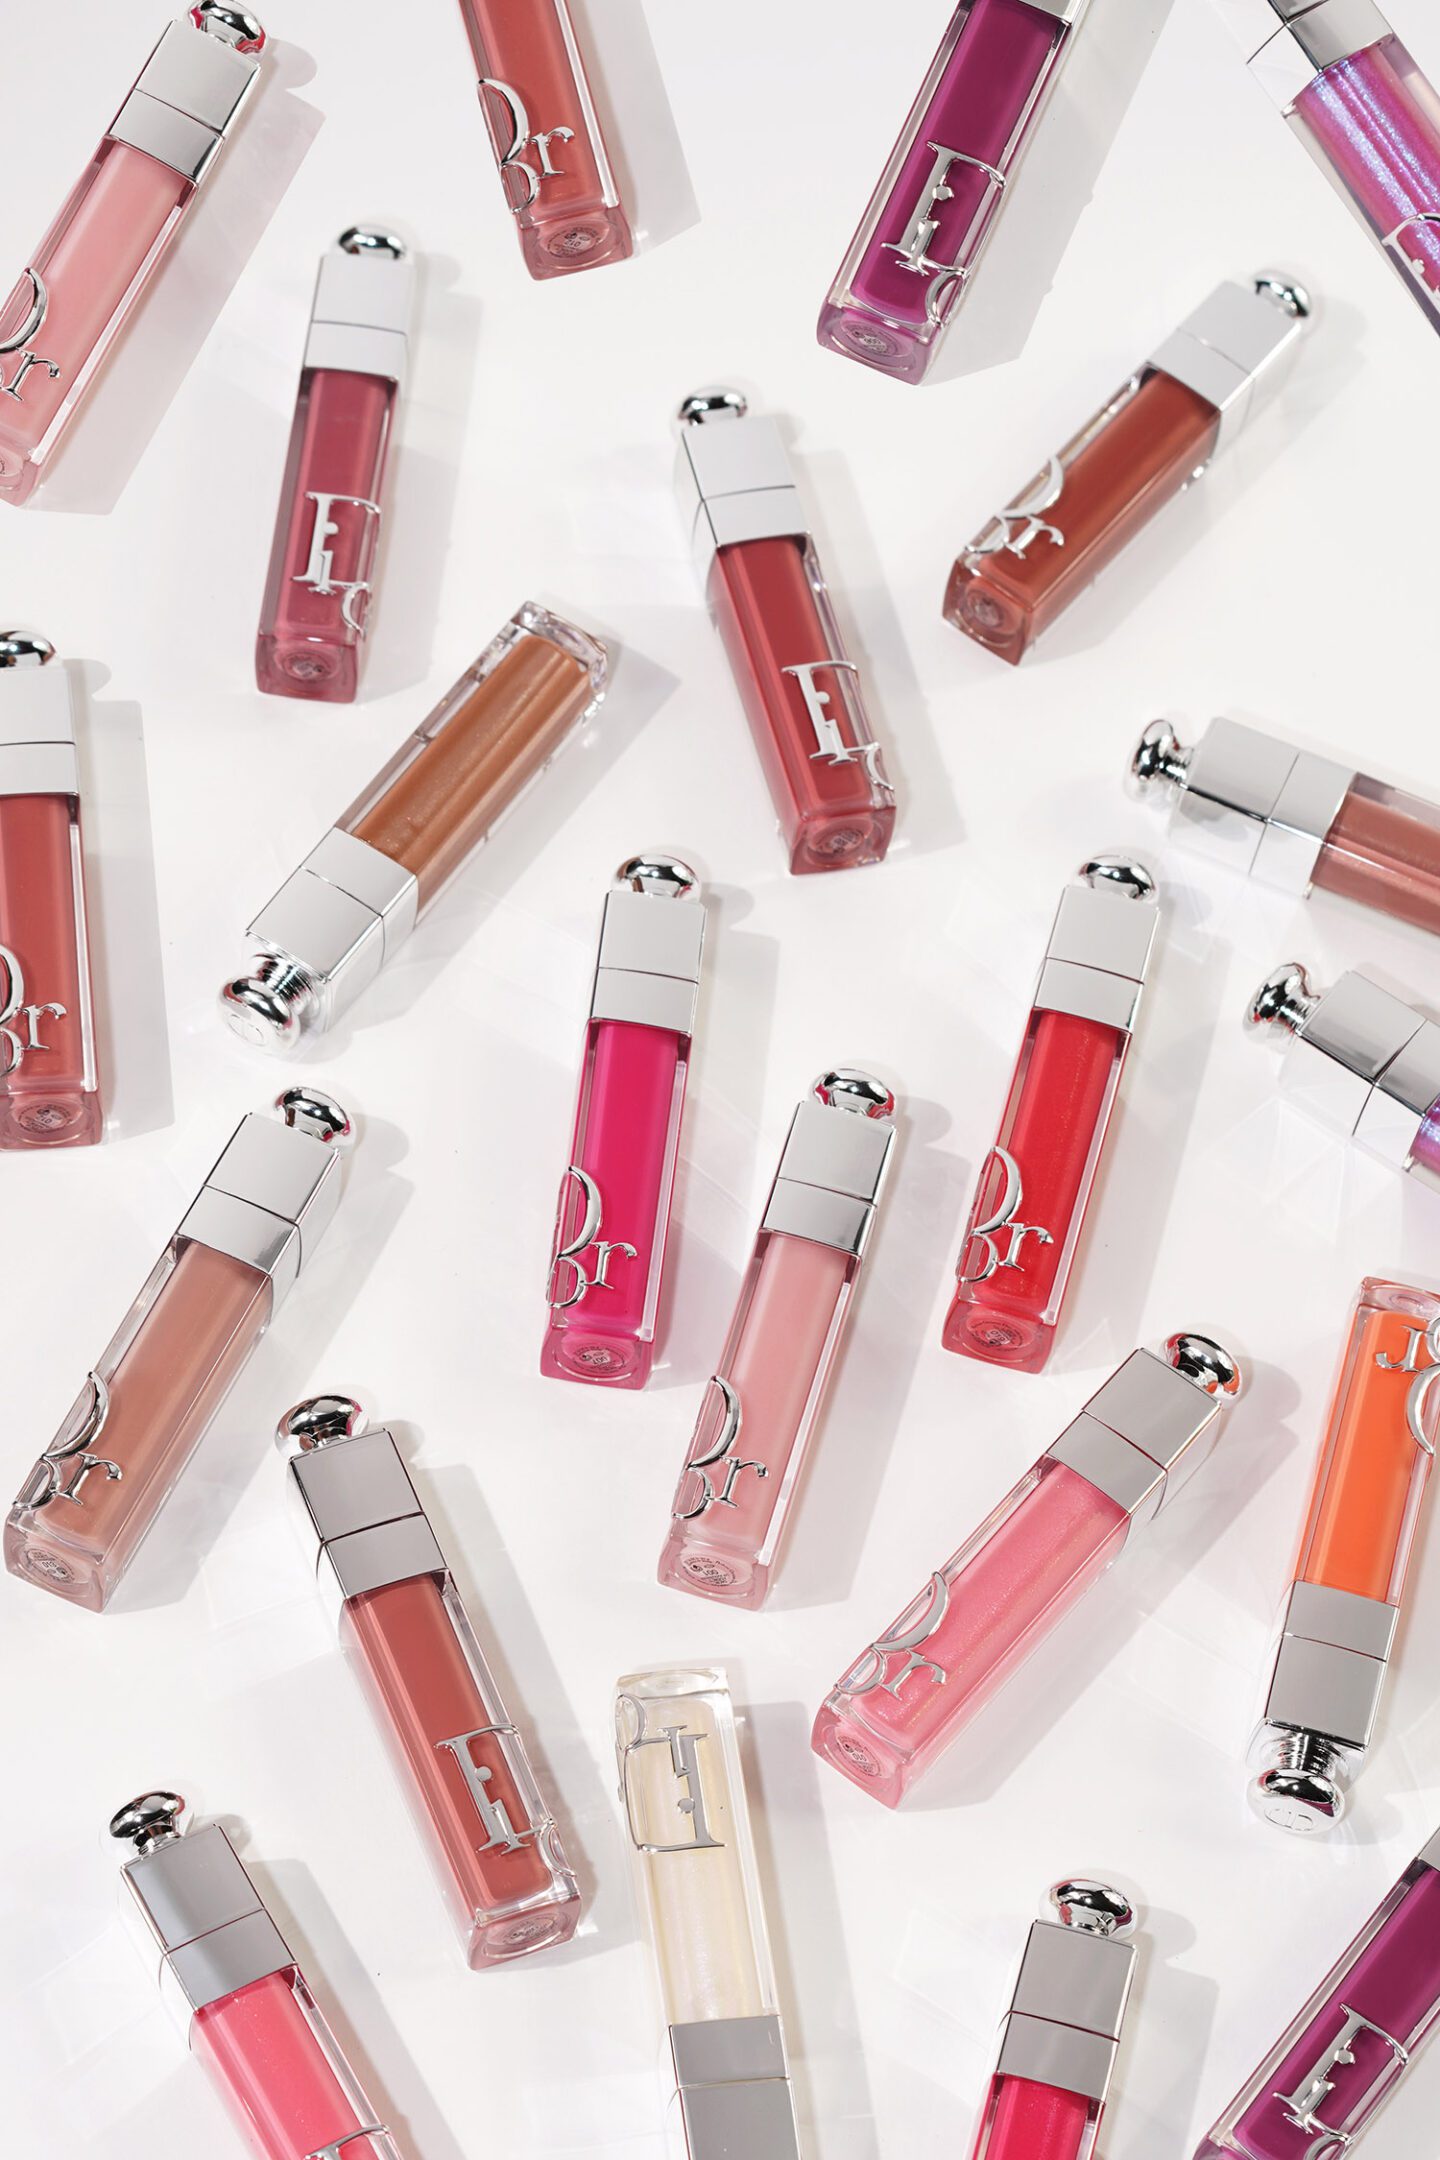 Dior Addict Lip Maximizers new formula and shades 2023